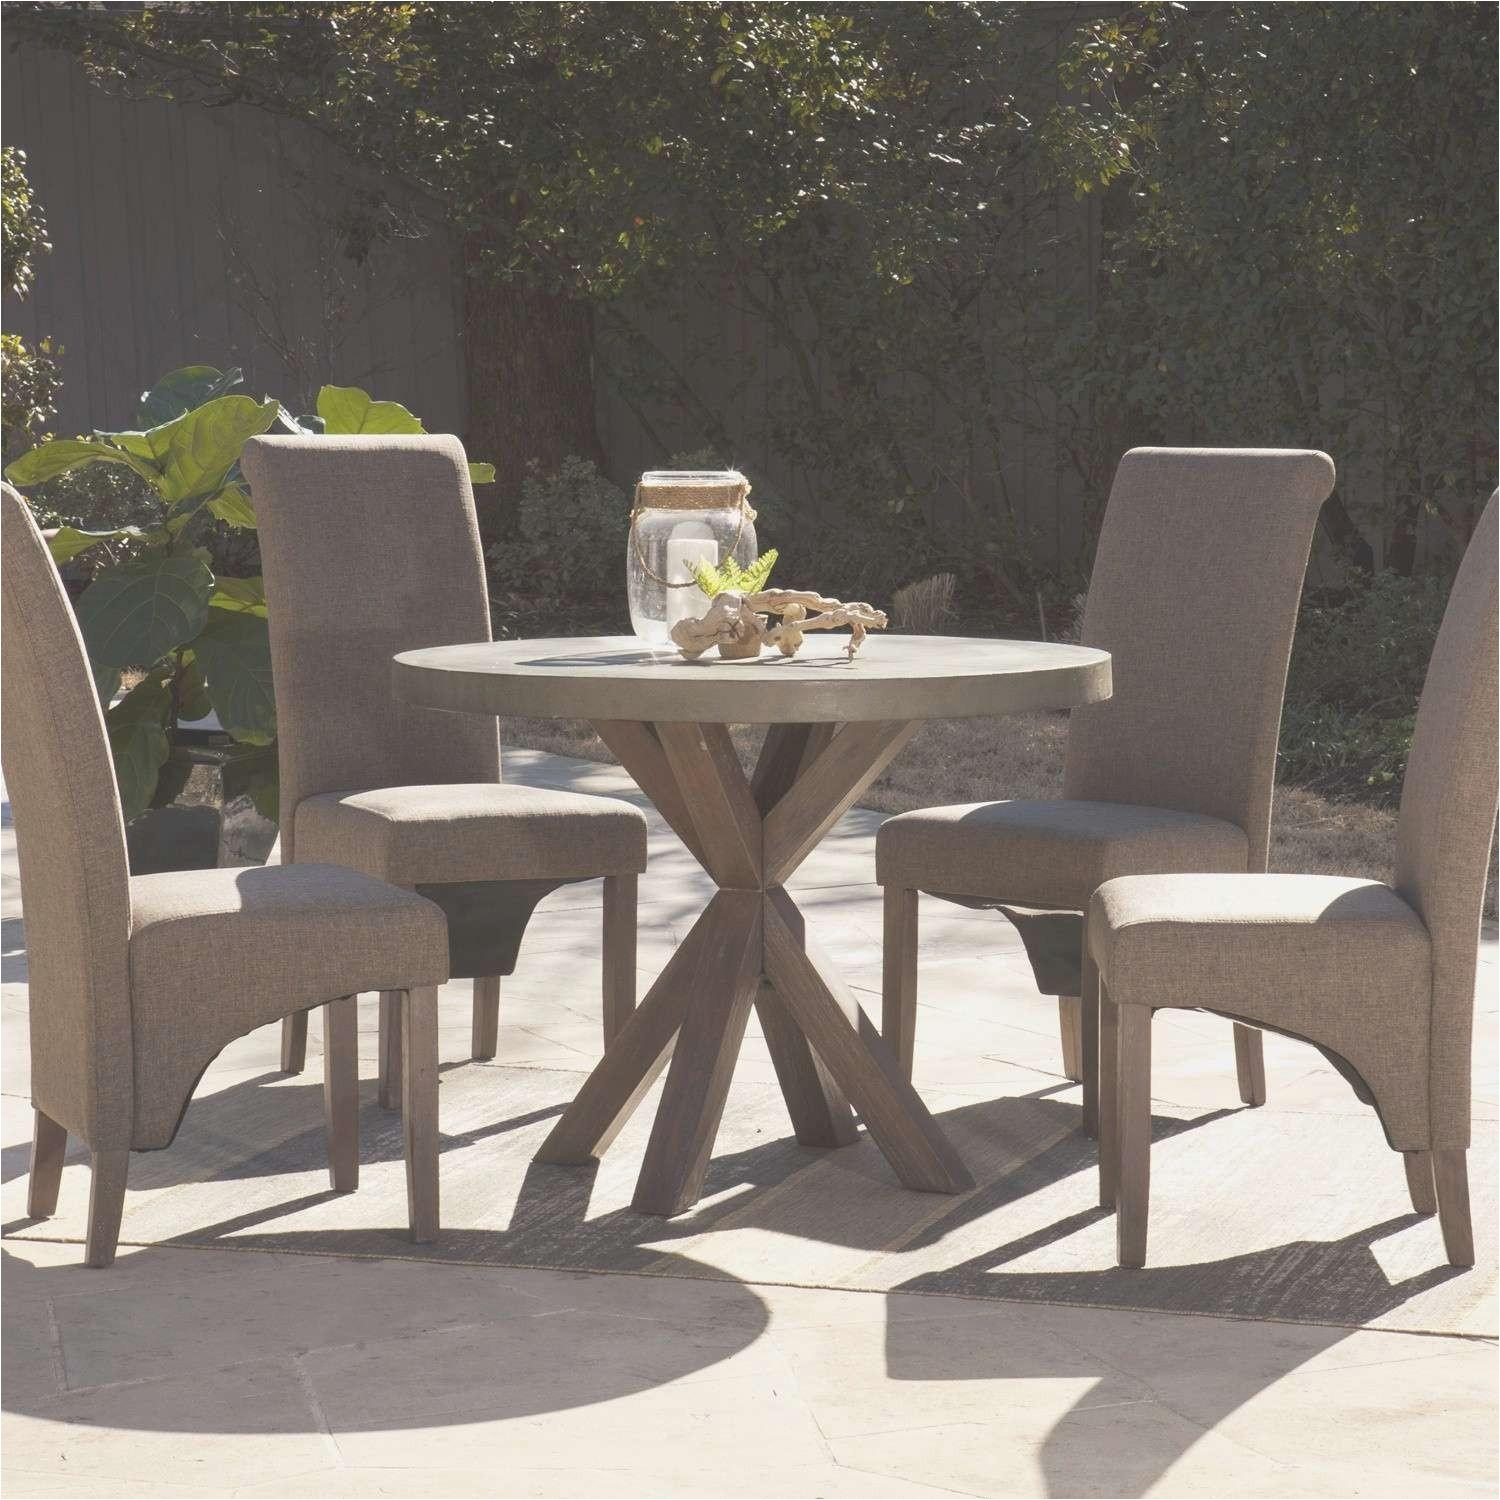 diy wood patio inspirational luxury 27 outdoor furniture diy home furniture ideas